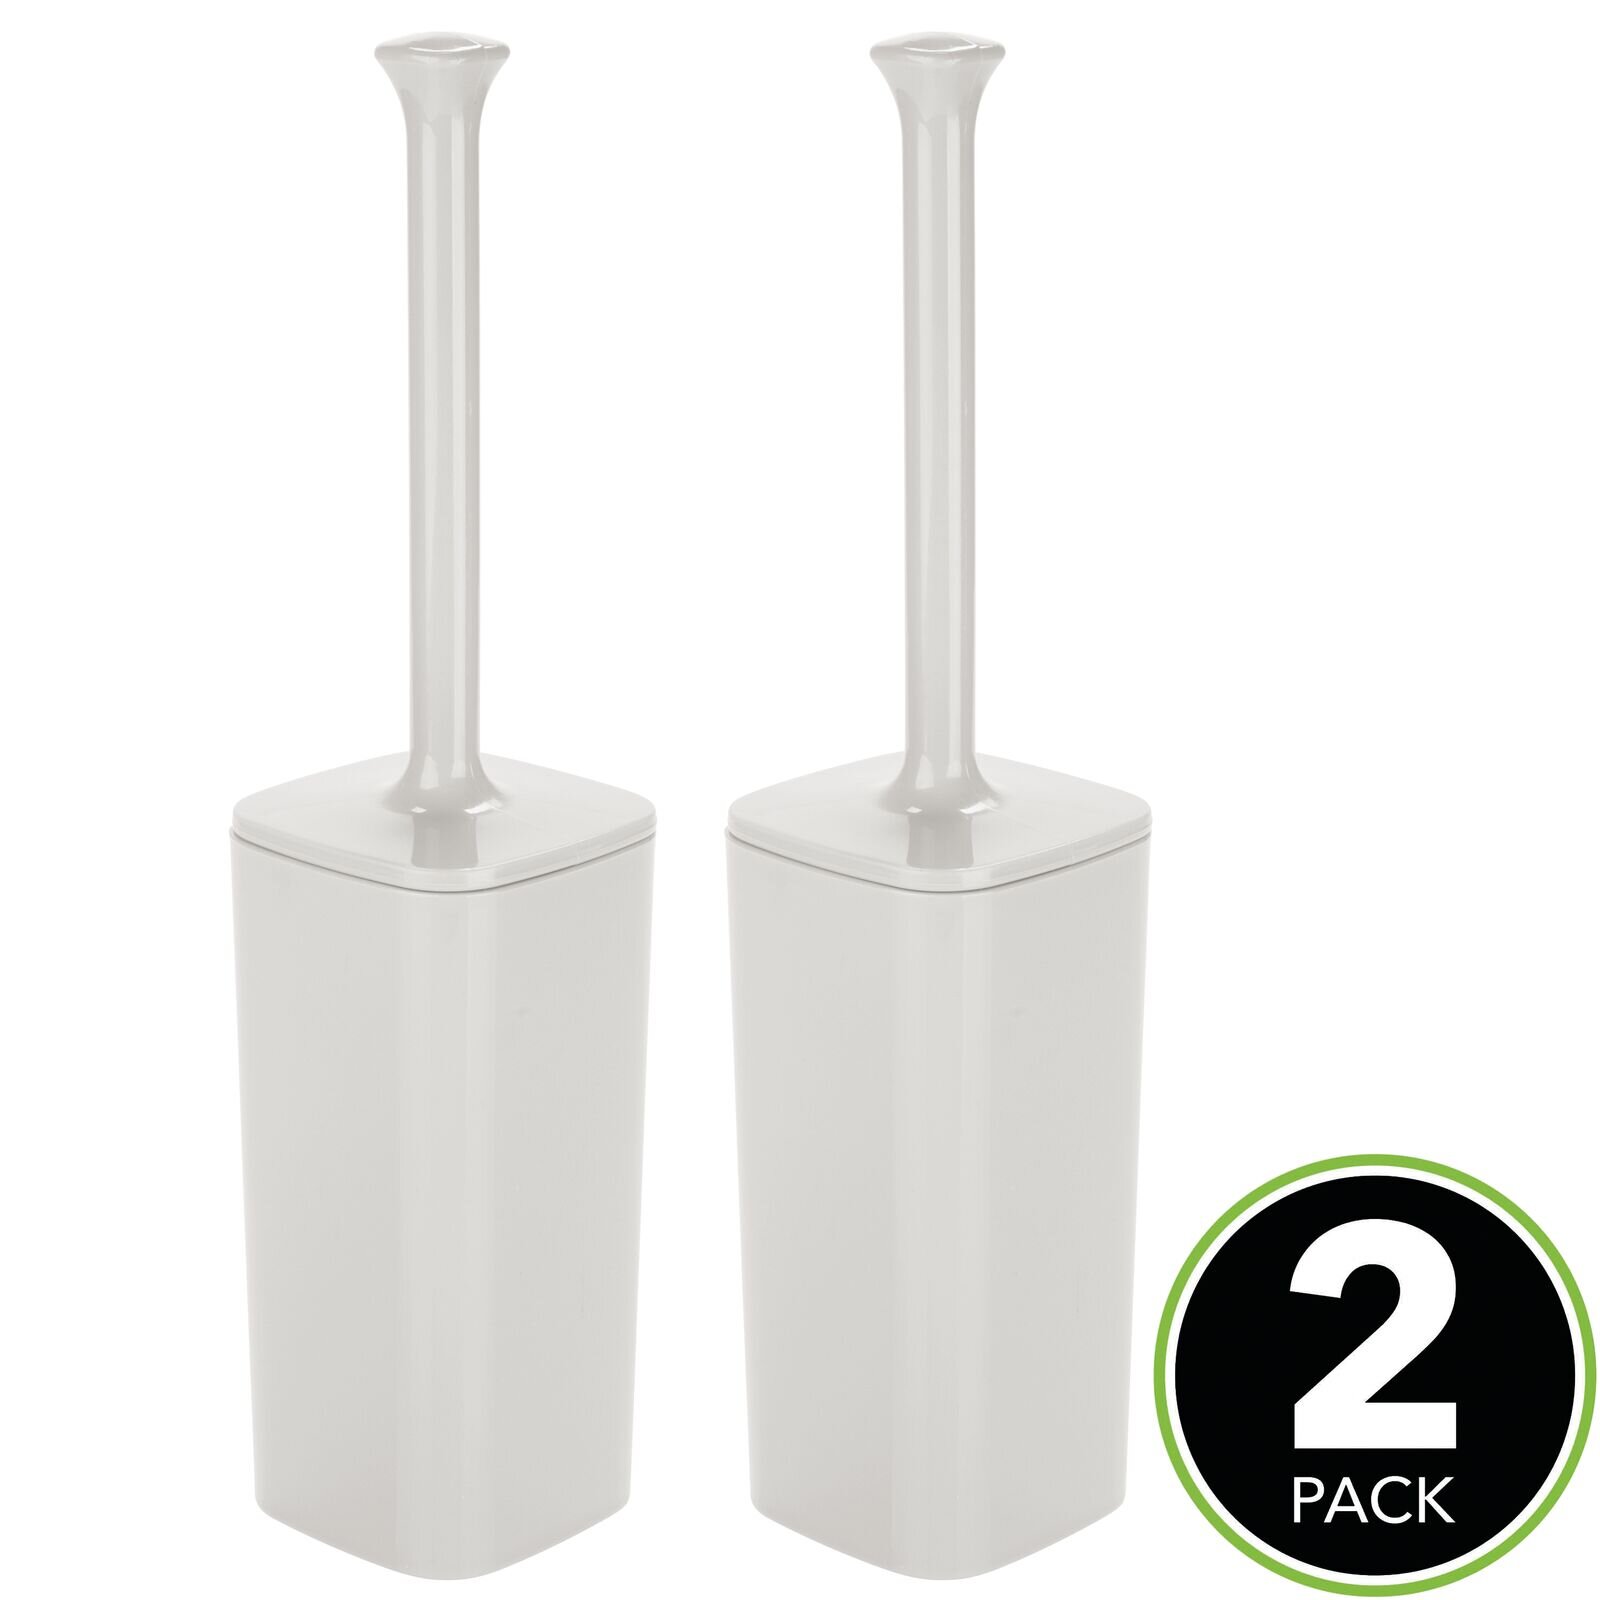 2 Pack White mDesign Compact Plastic Bathroom Toilet Bowl Brush and Holder